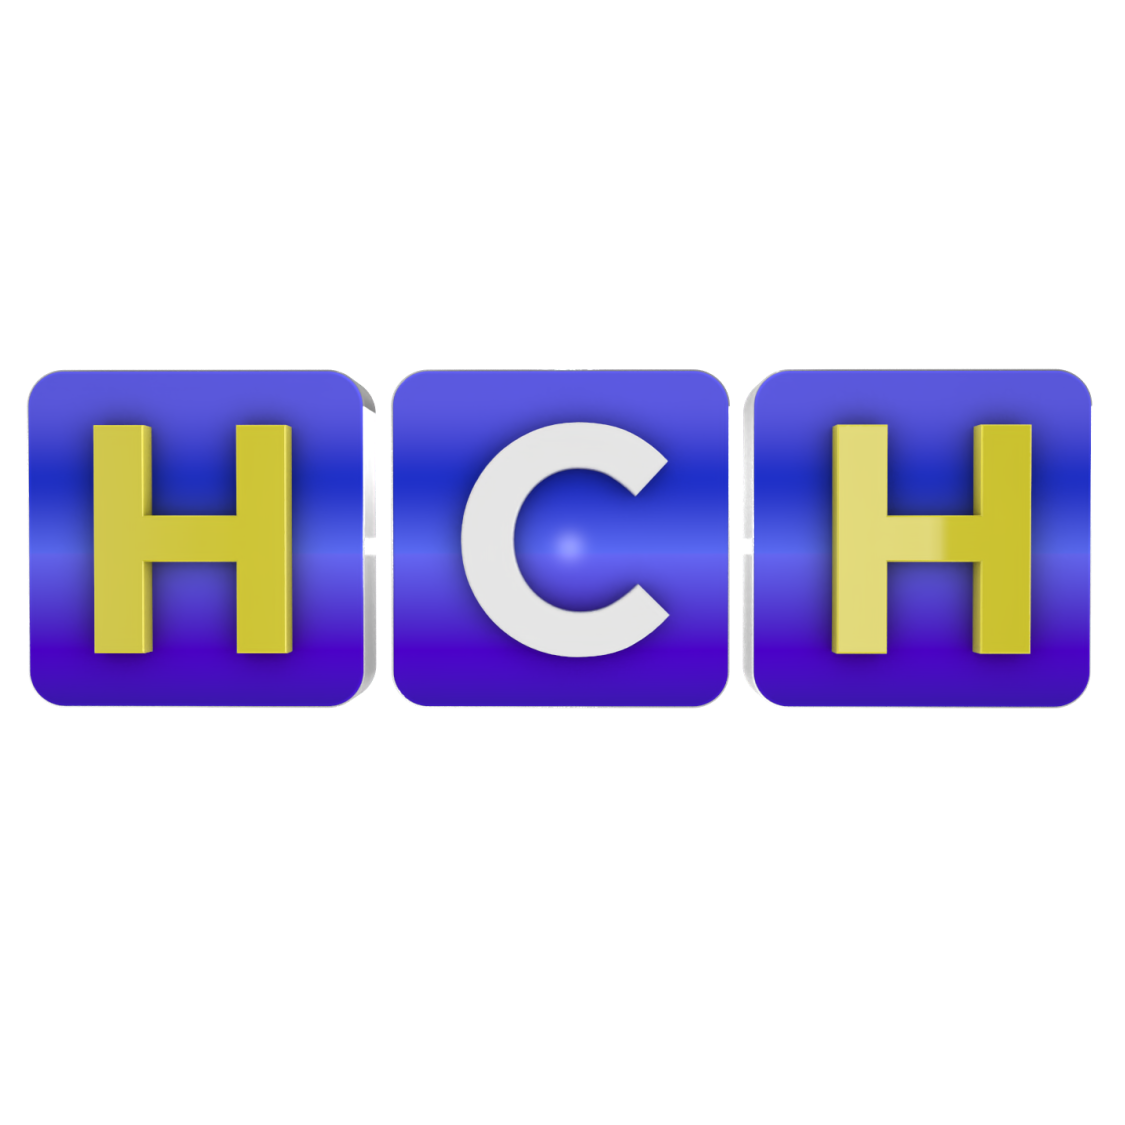 HCH. Канал номер 8